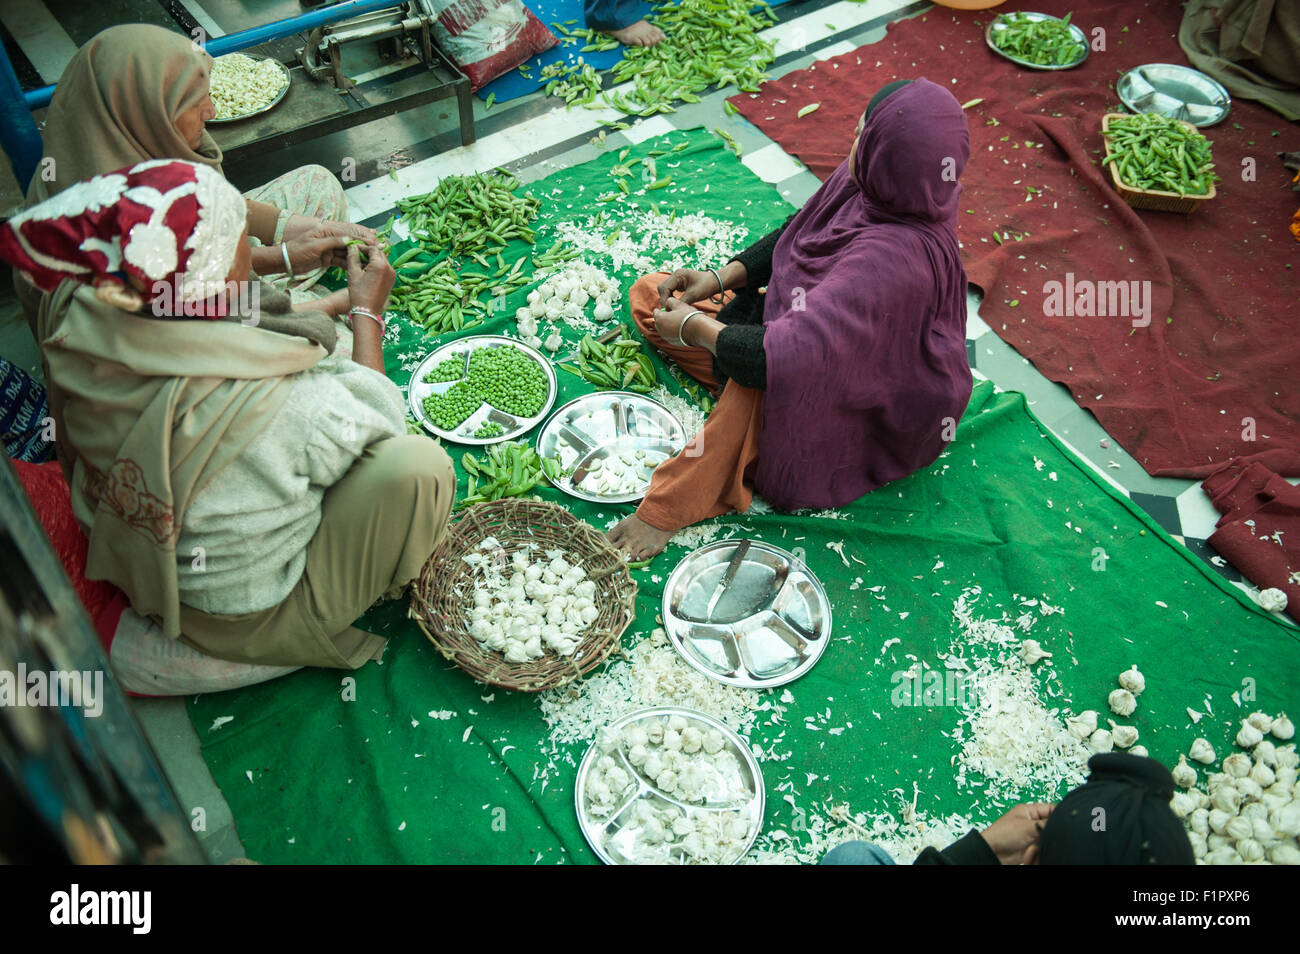 Amritsar, Punjab, India.  The Golden Temple - Harmandir Sahib; three women sit in the Langar kitchen preparing food, shelling peas, peeling garlic. Stock Photo